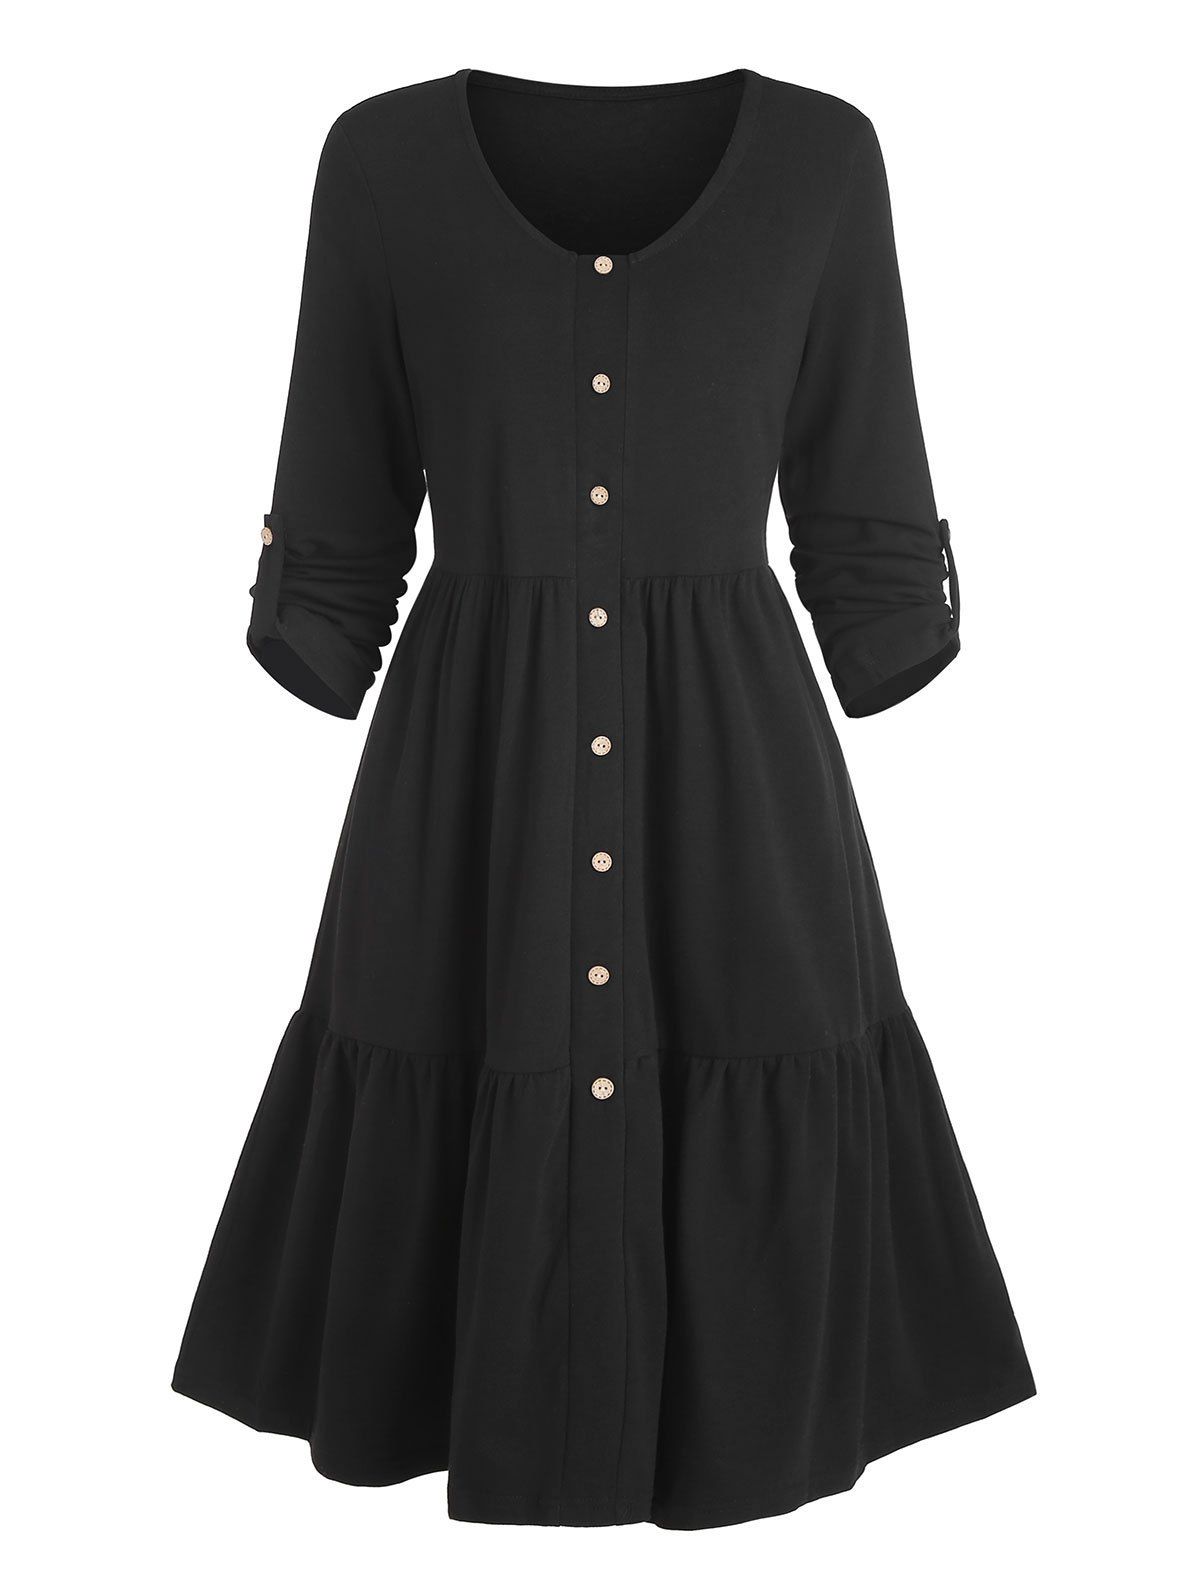 Mock Button Roll Up Sleeve Flounce Hem Dress - BLACK S